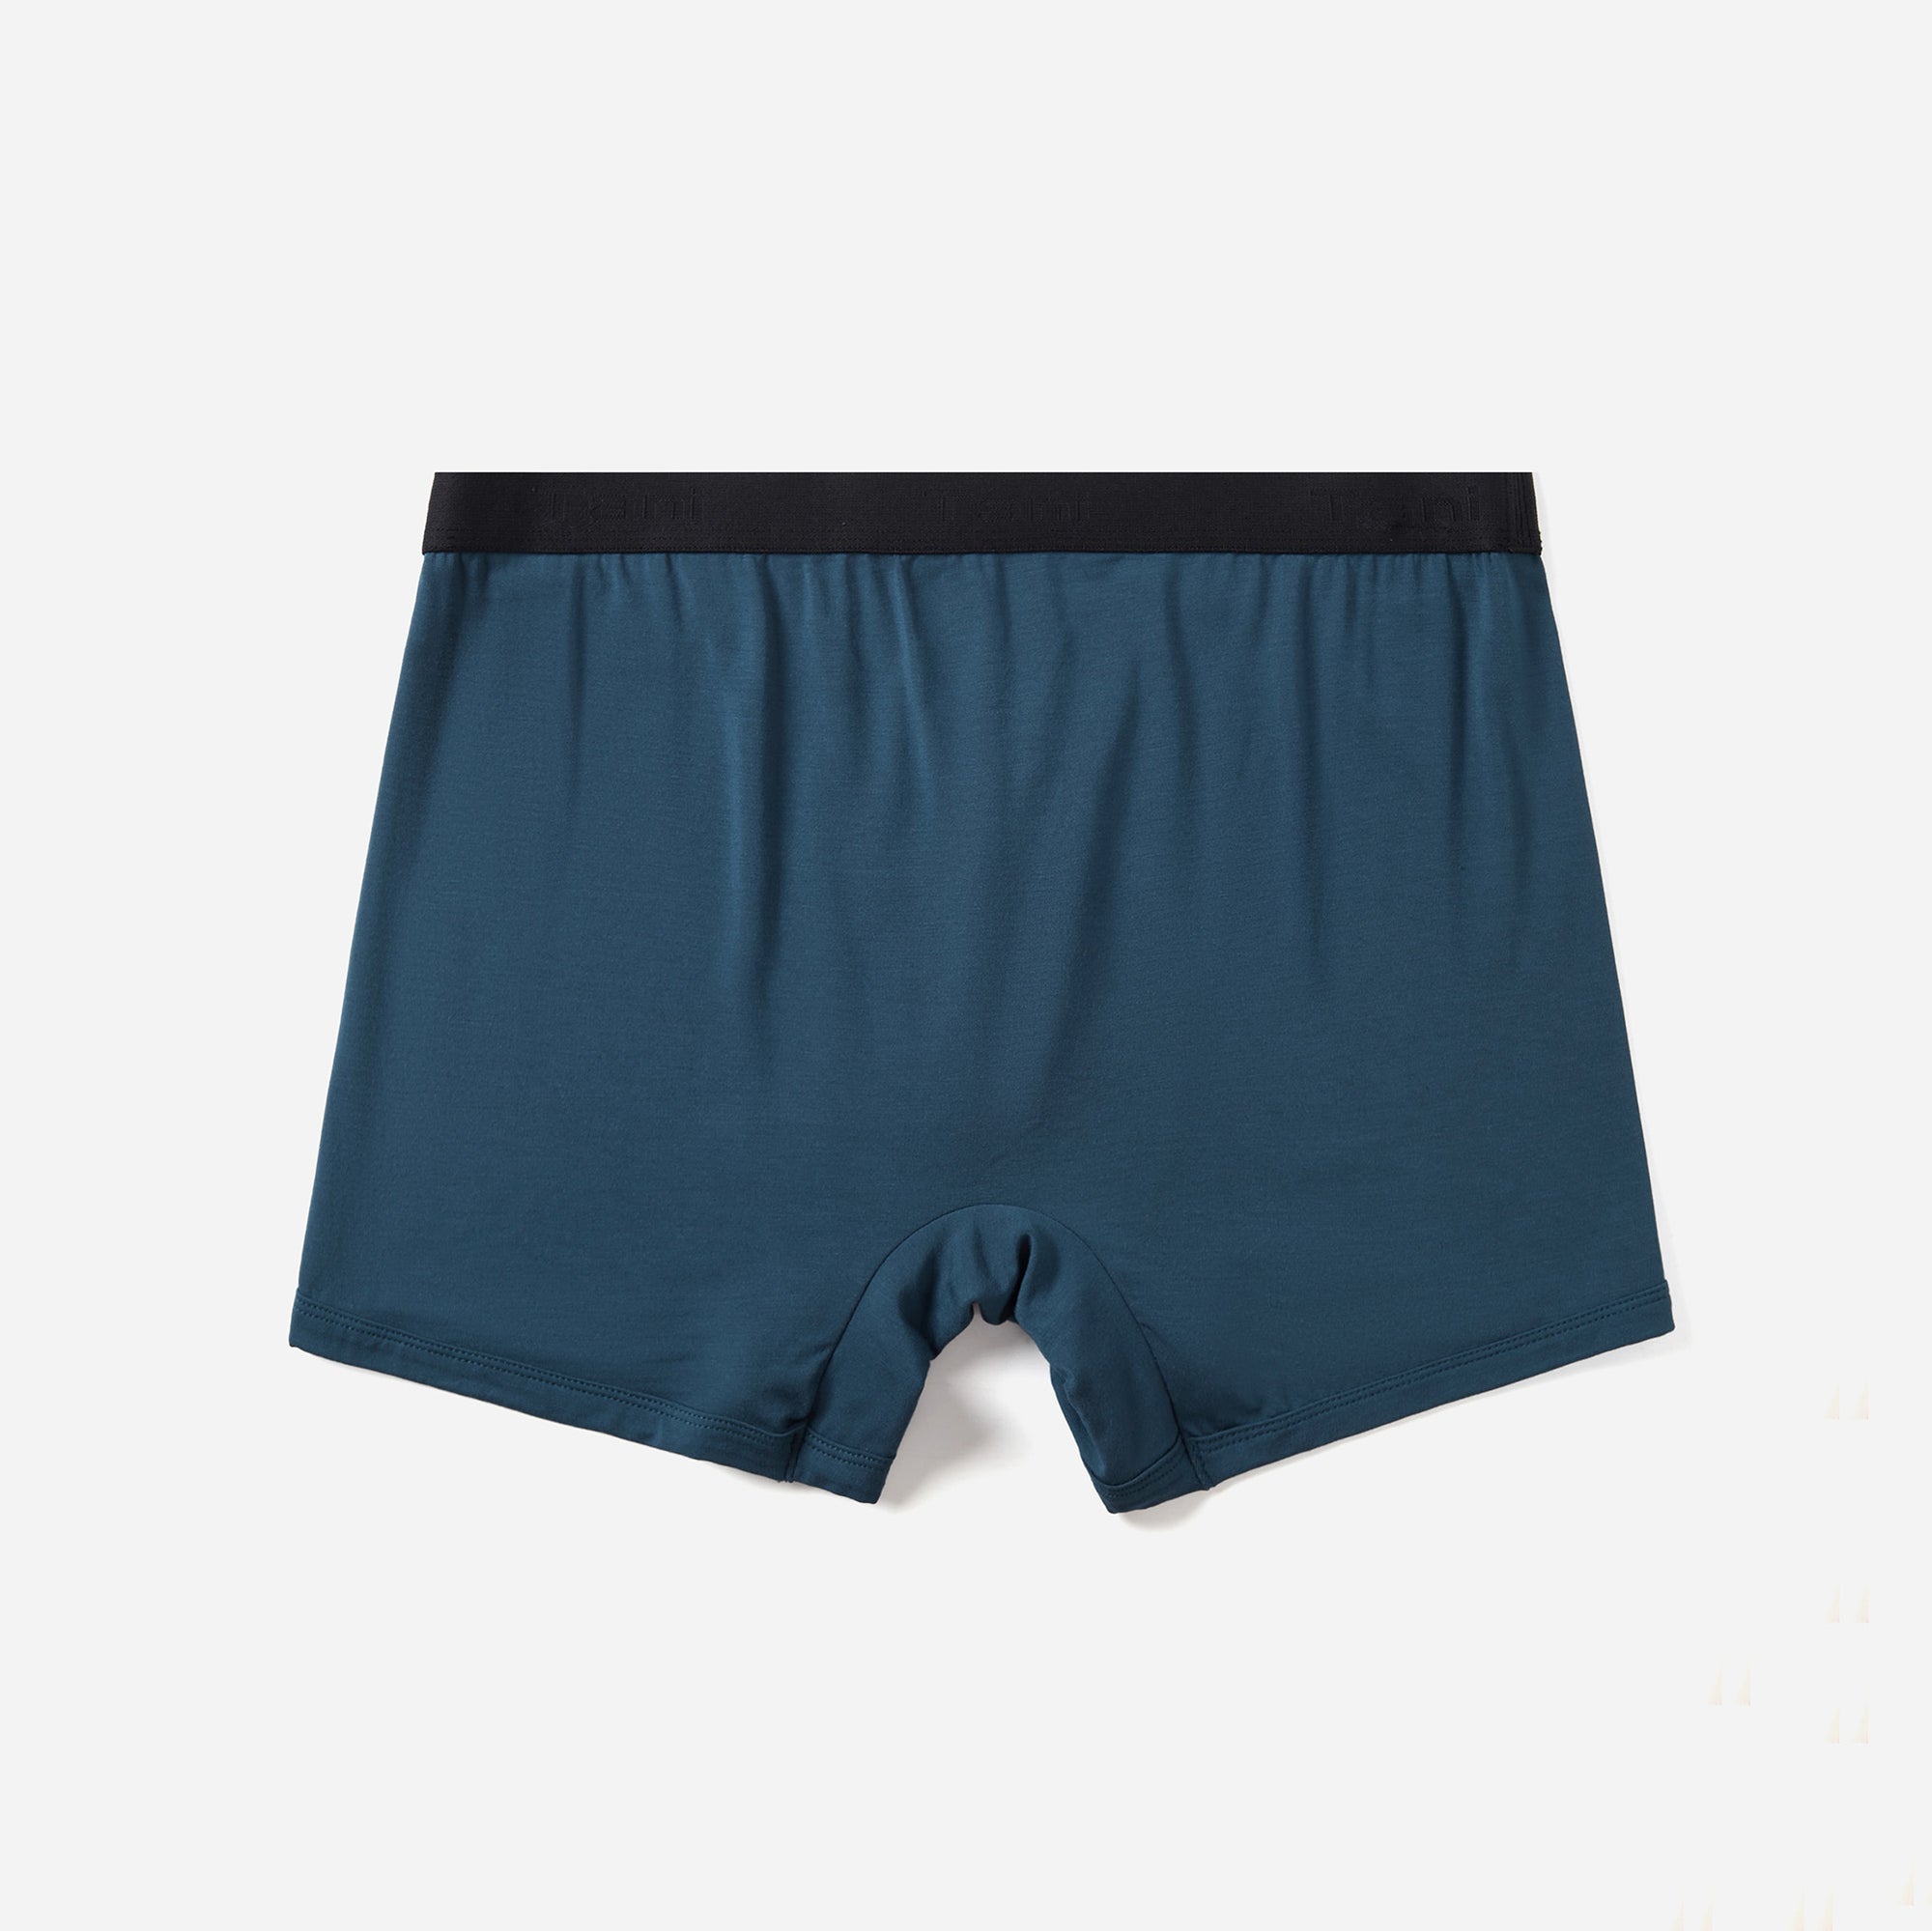 Crazy Tiger Prints Men's Boxer Briefs Soft Underwear Covered Waistband  Short Leg